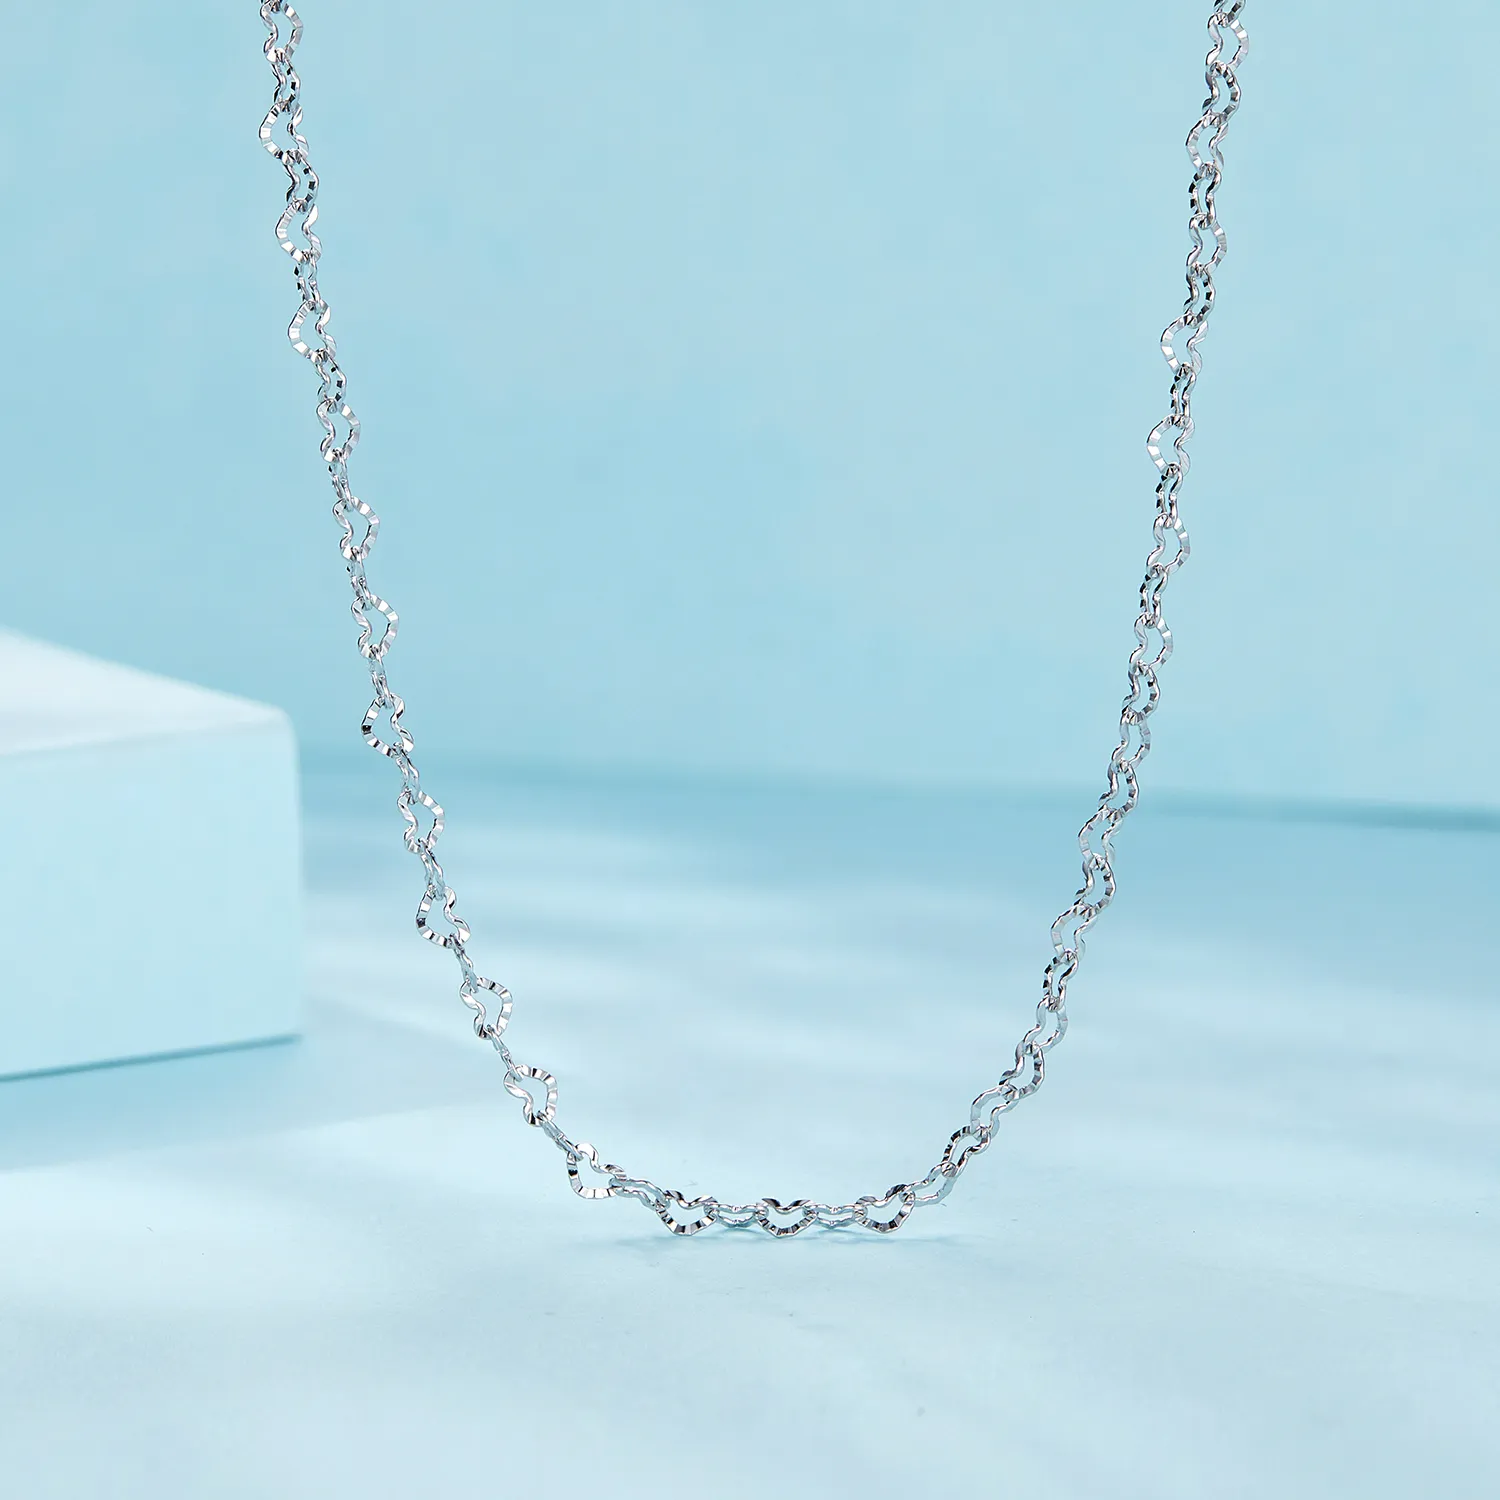 Pandora Style Link Necklace - SCA026